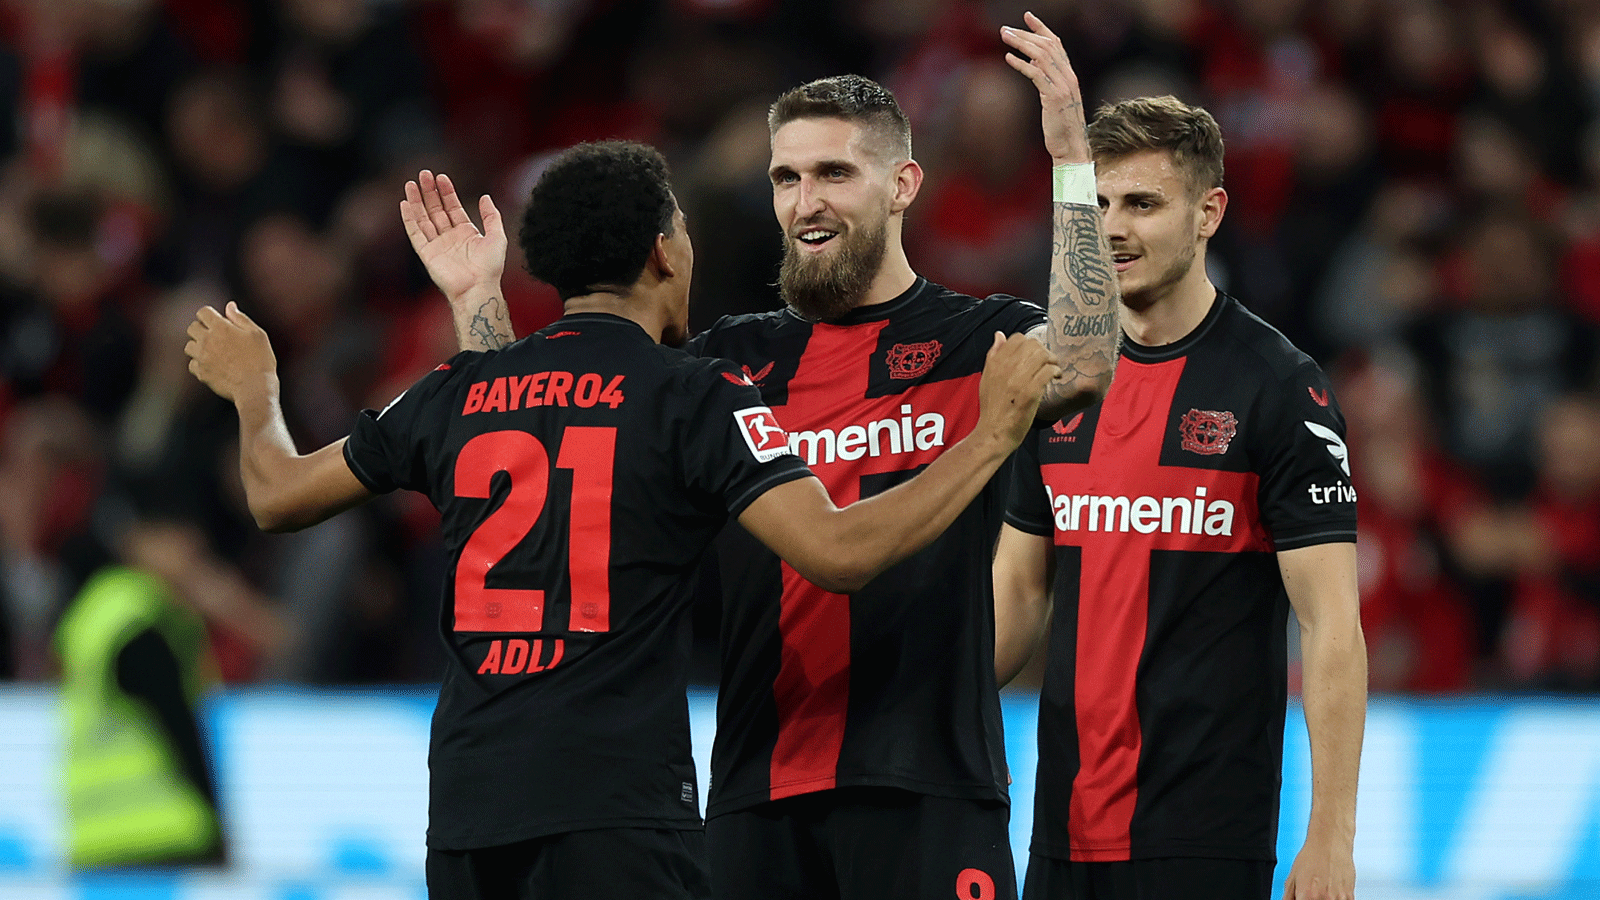 Leverkusen vs. Stuttgart 2:2!  Another last-minute goal keeps the Werkself’s streak going